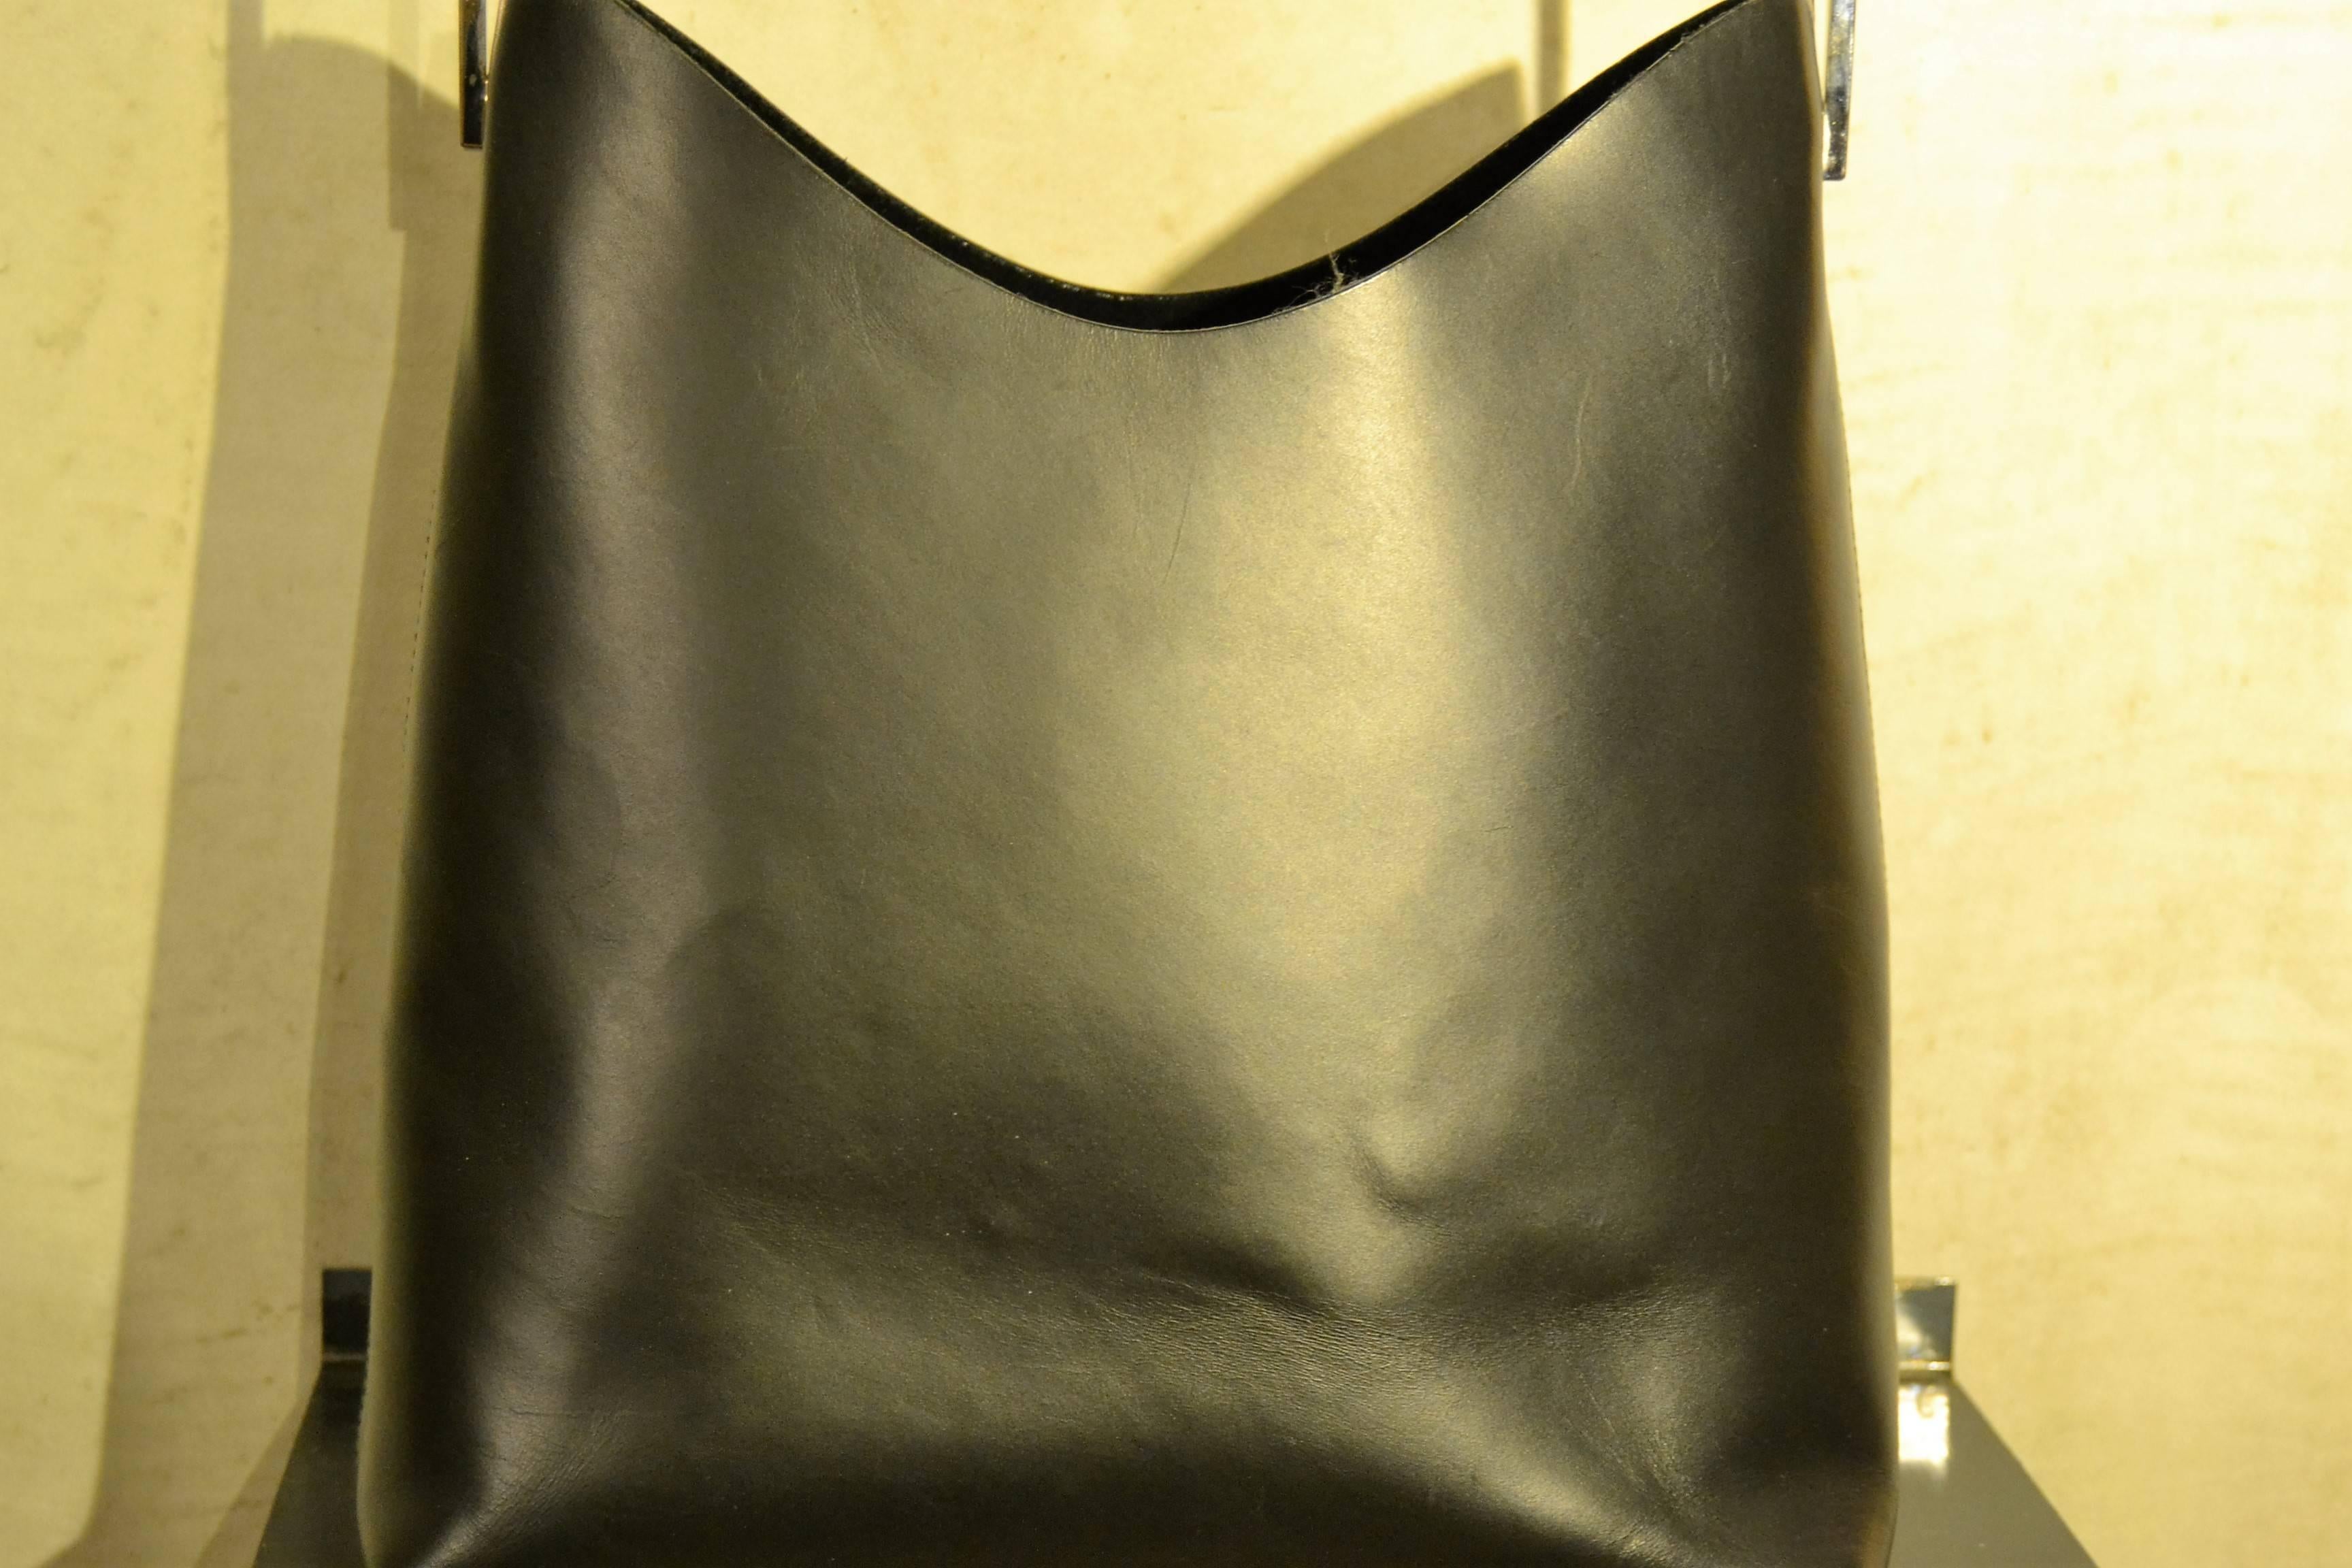 Black 2000s Gucci black leather bag